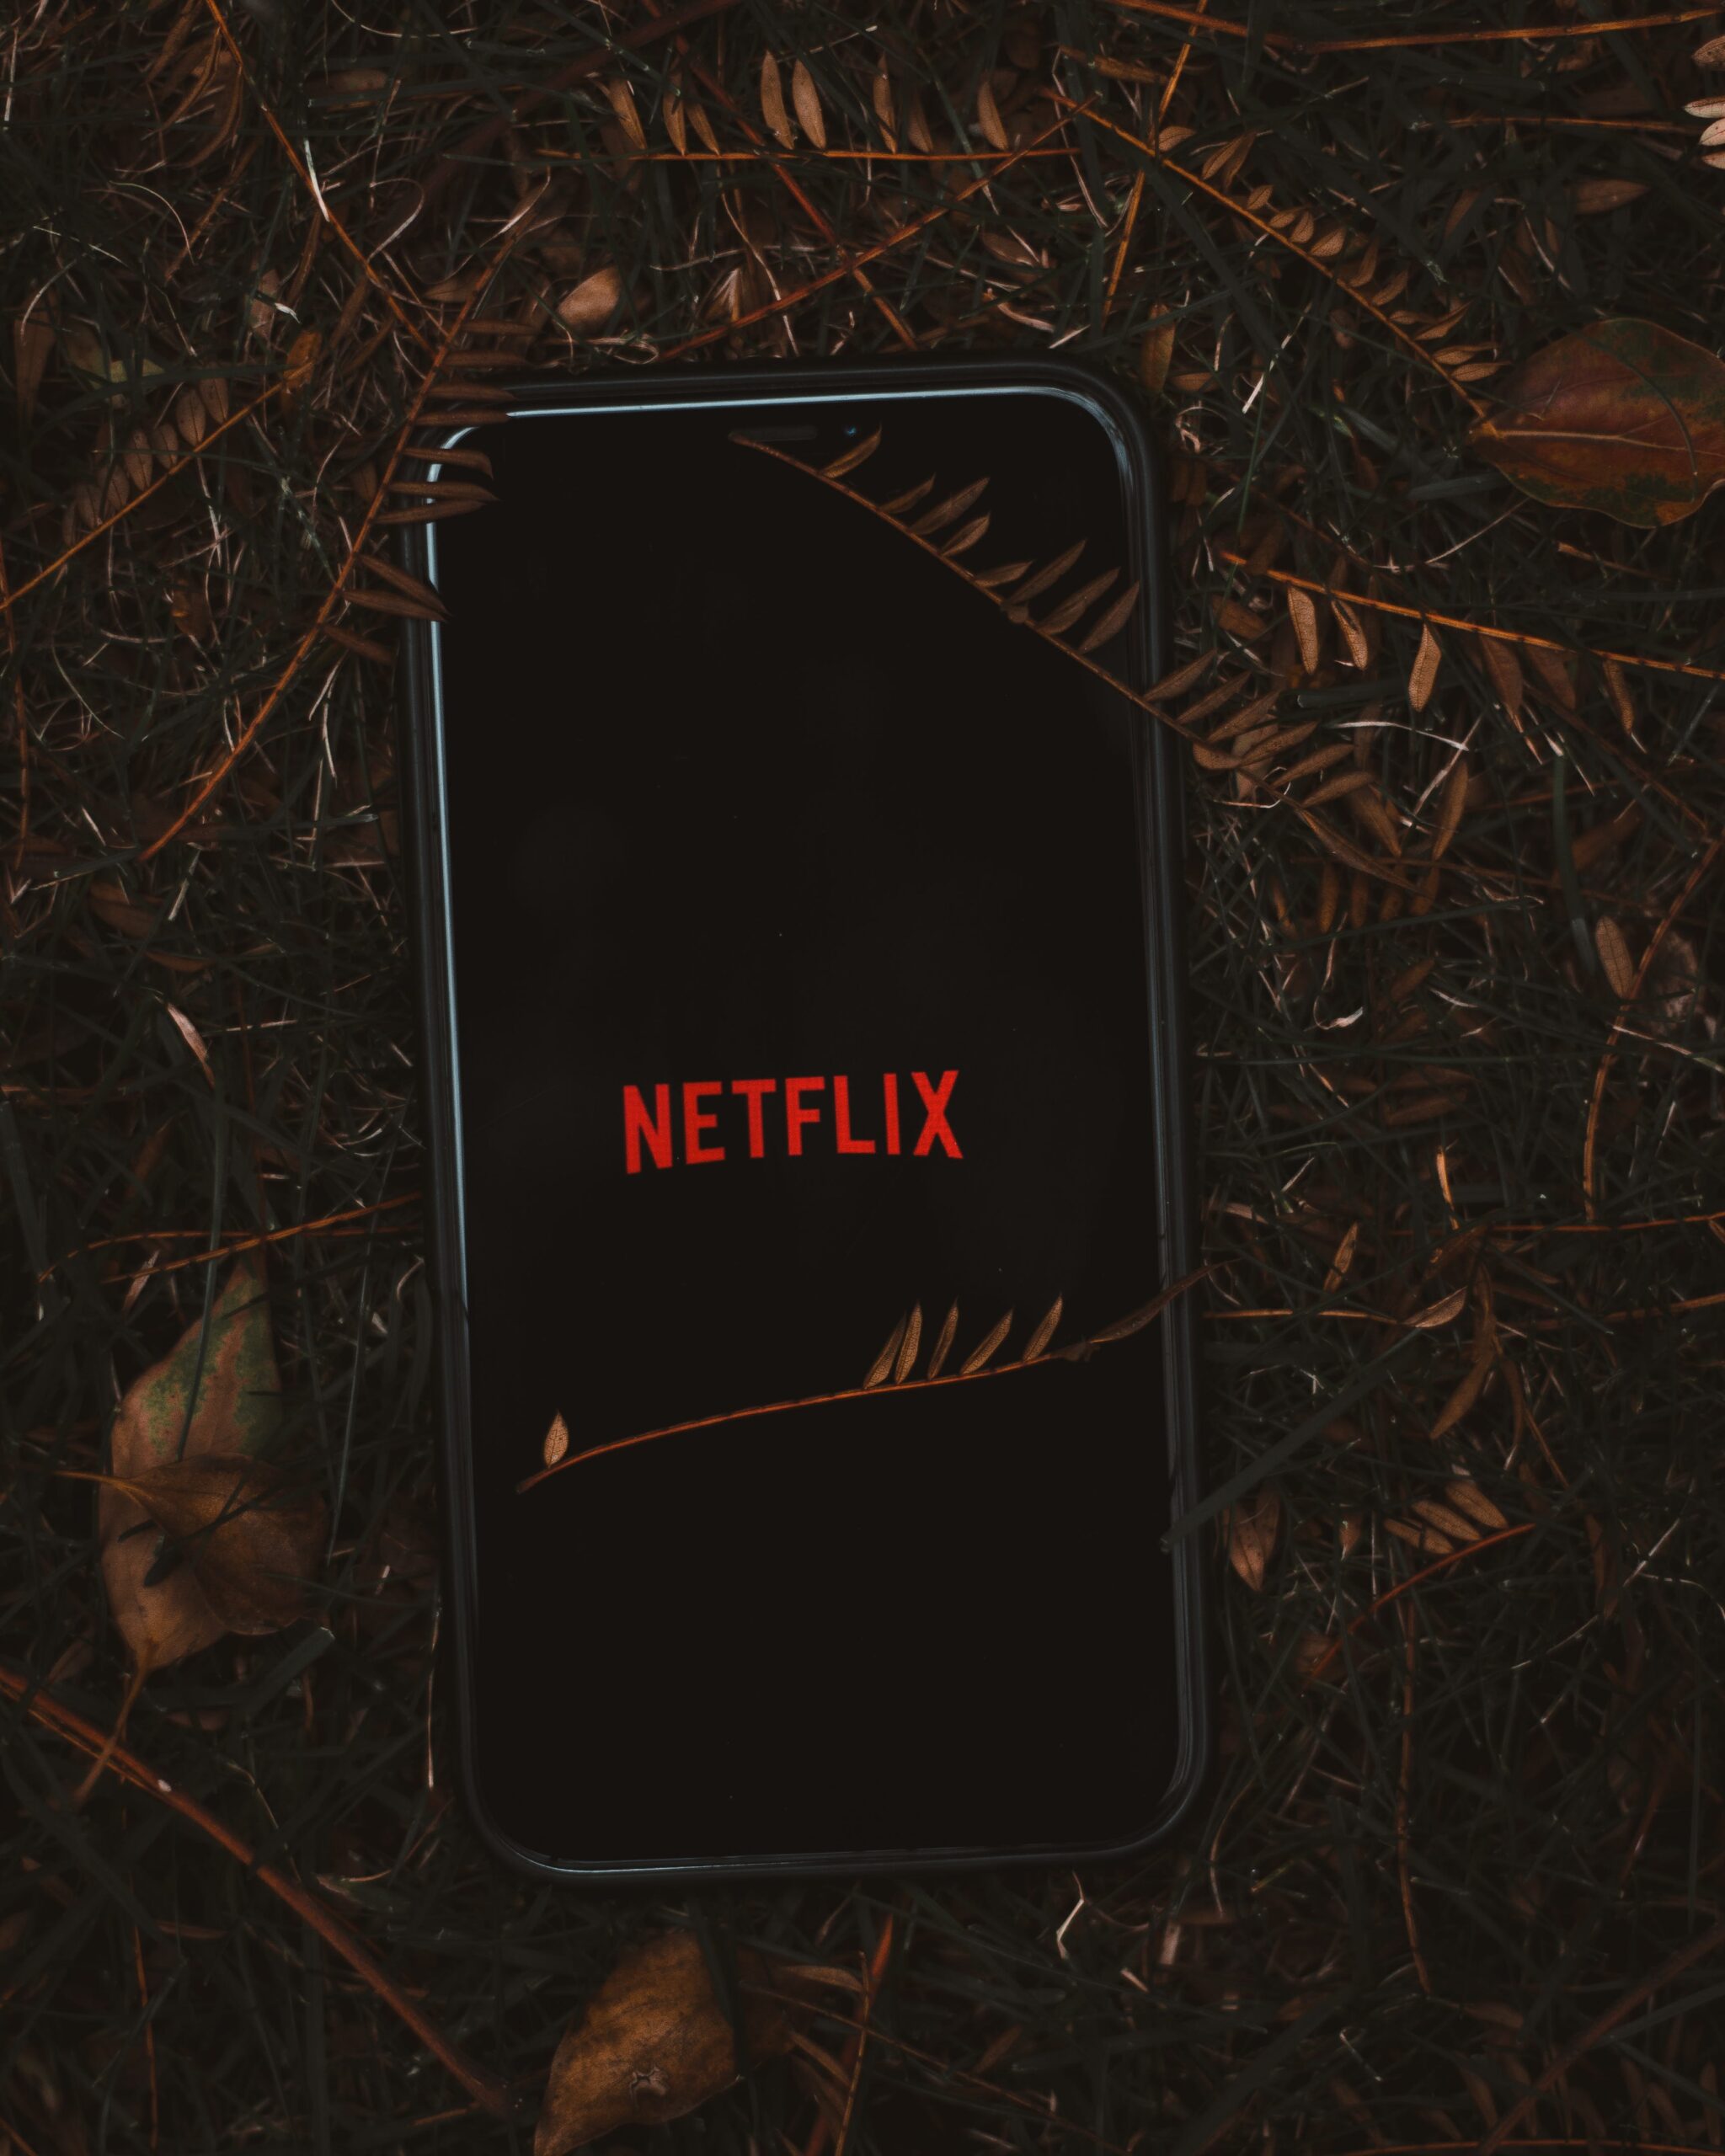 Blogging Season 1 of Lilyhammer by Netflix